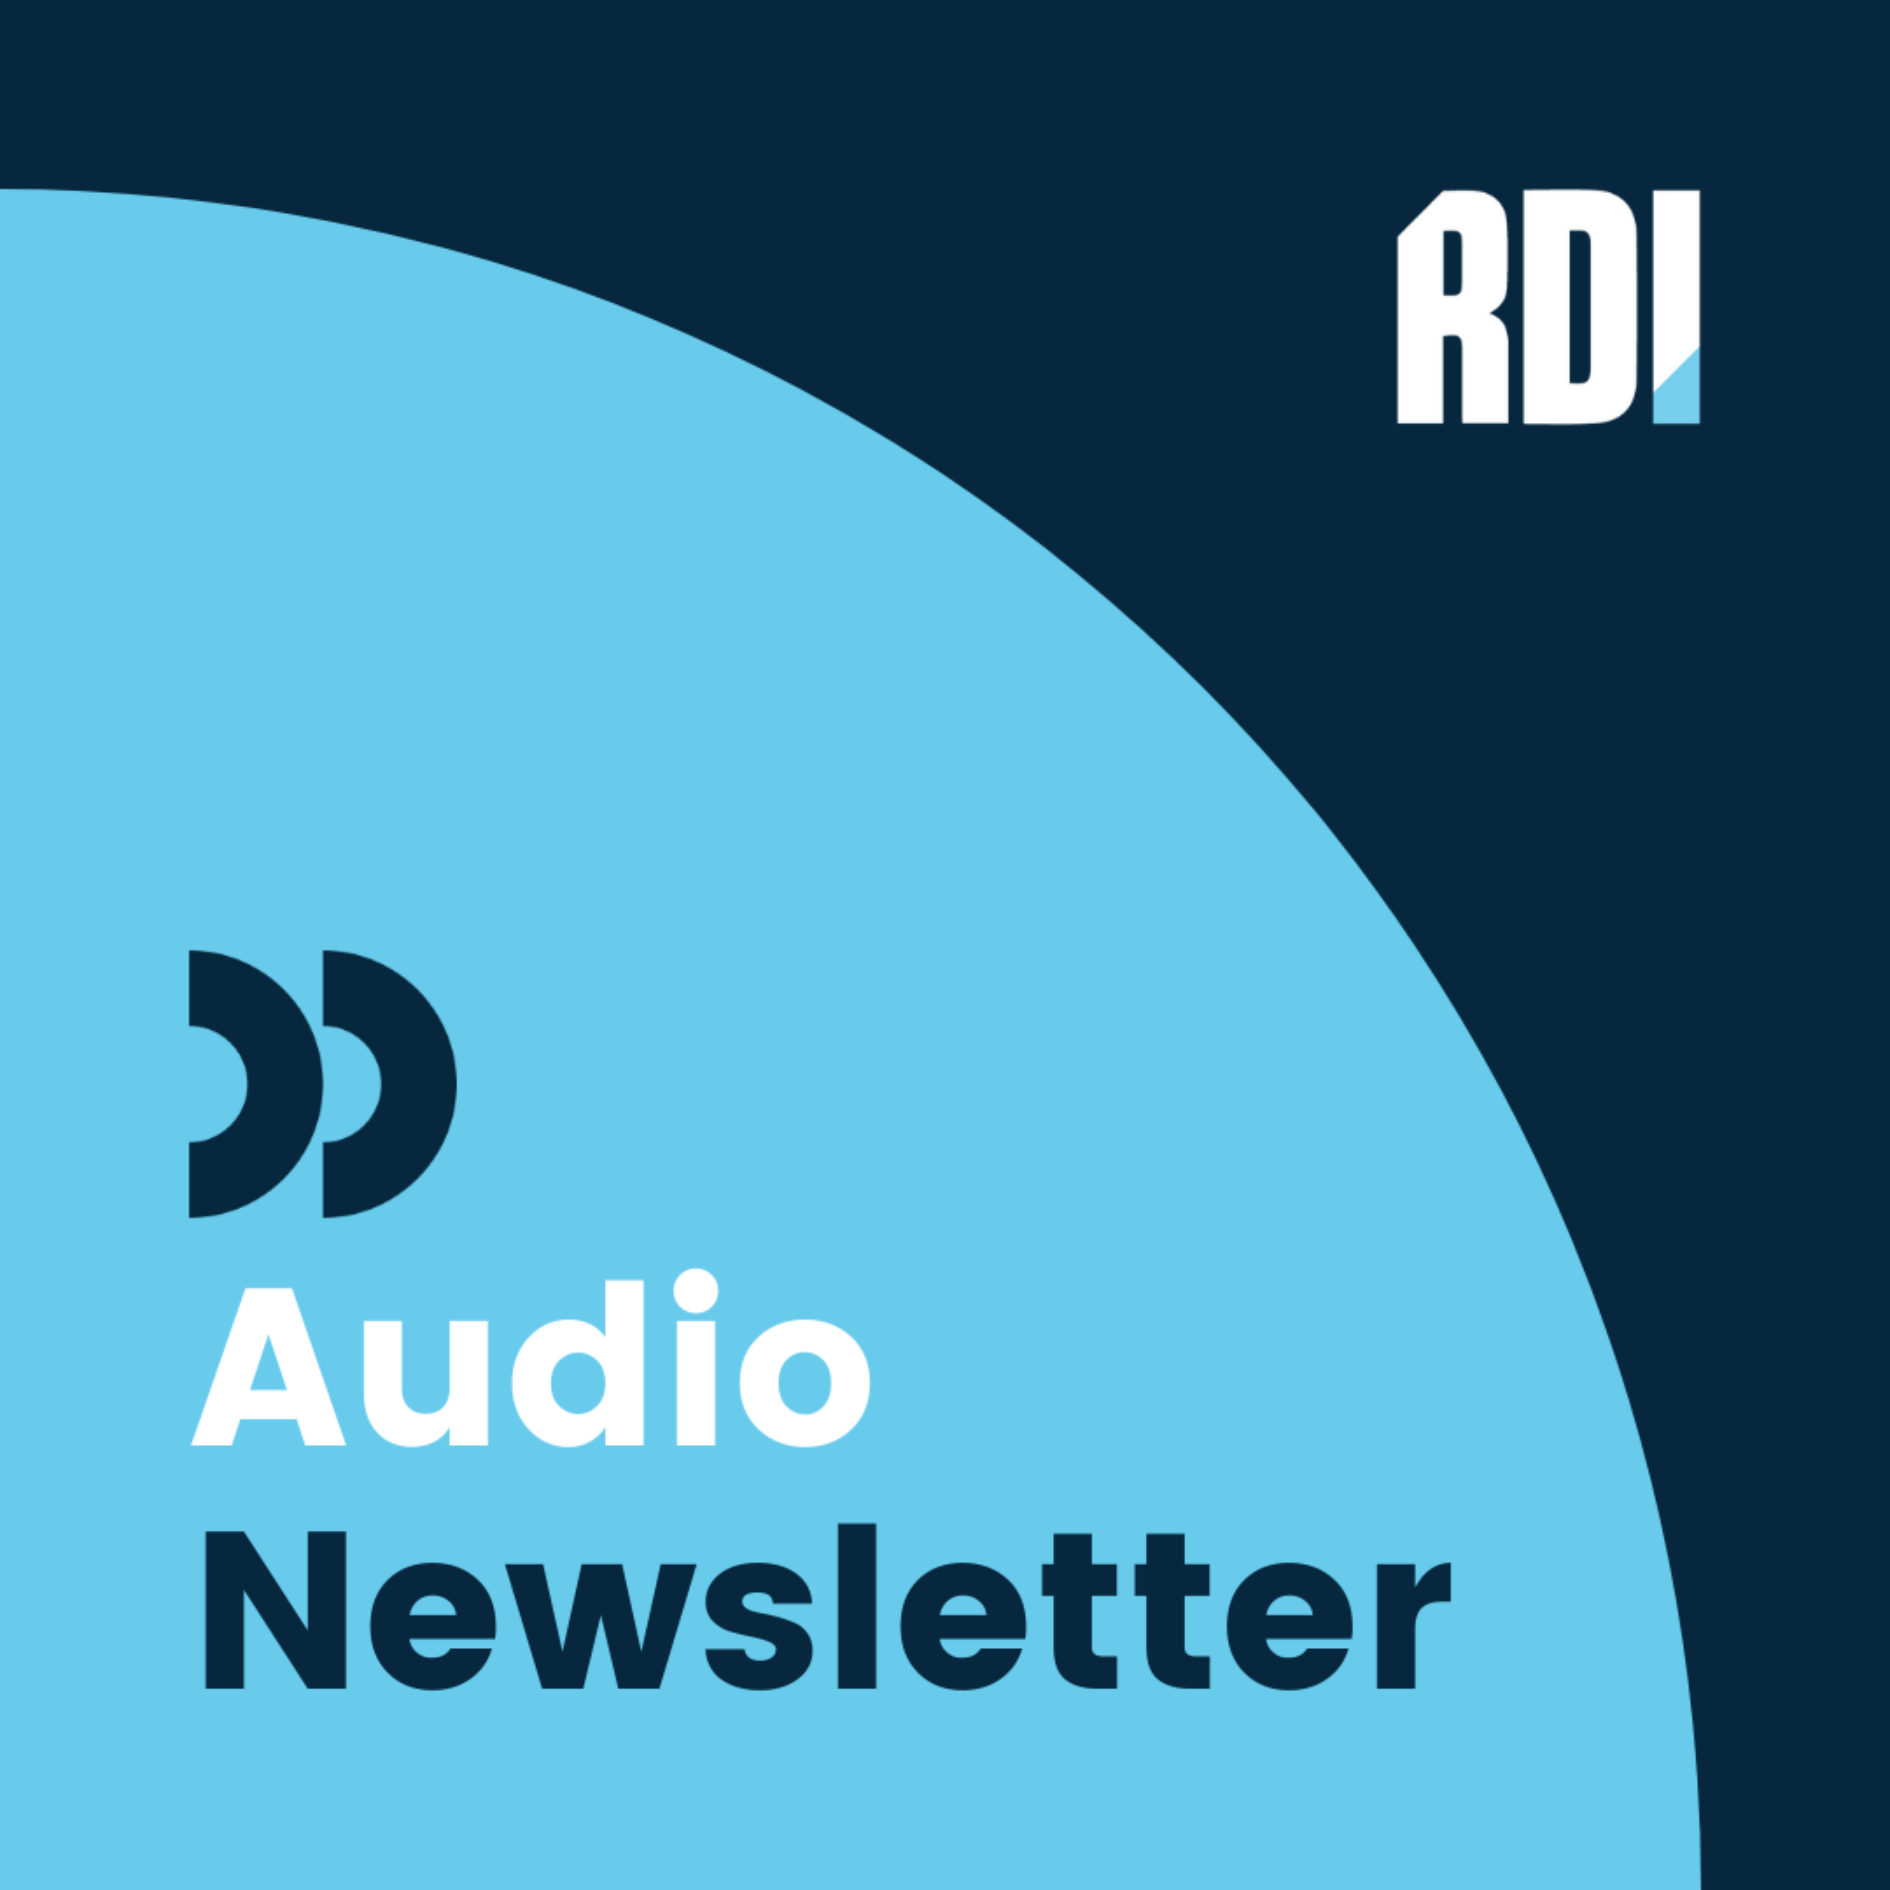 RDI Newsletter Podcast